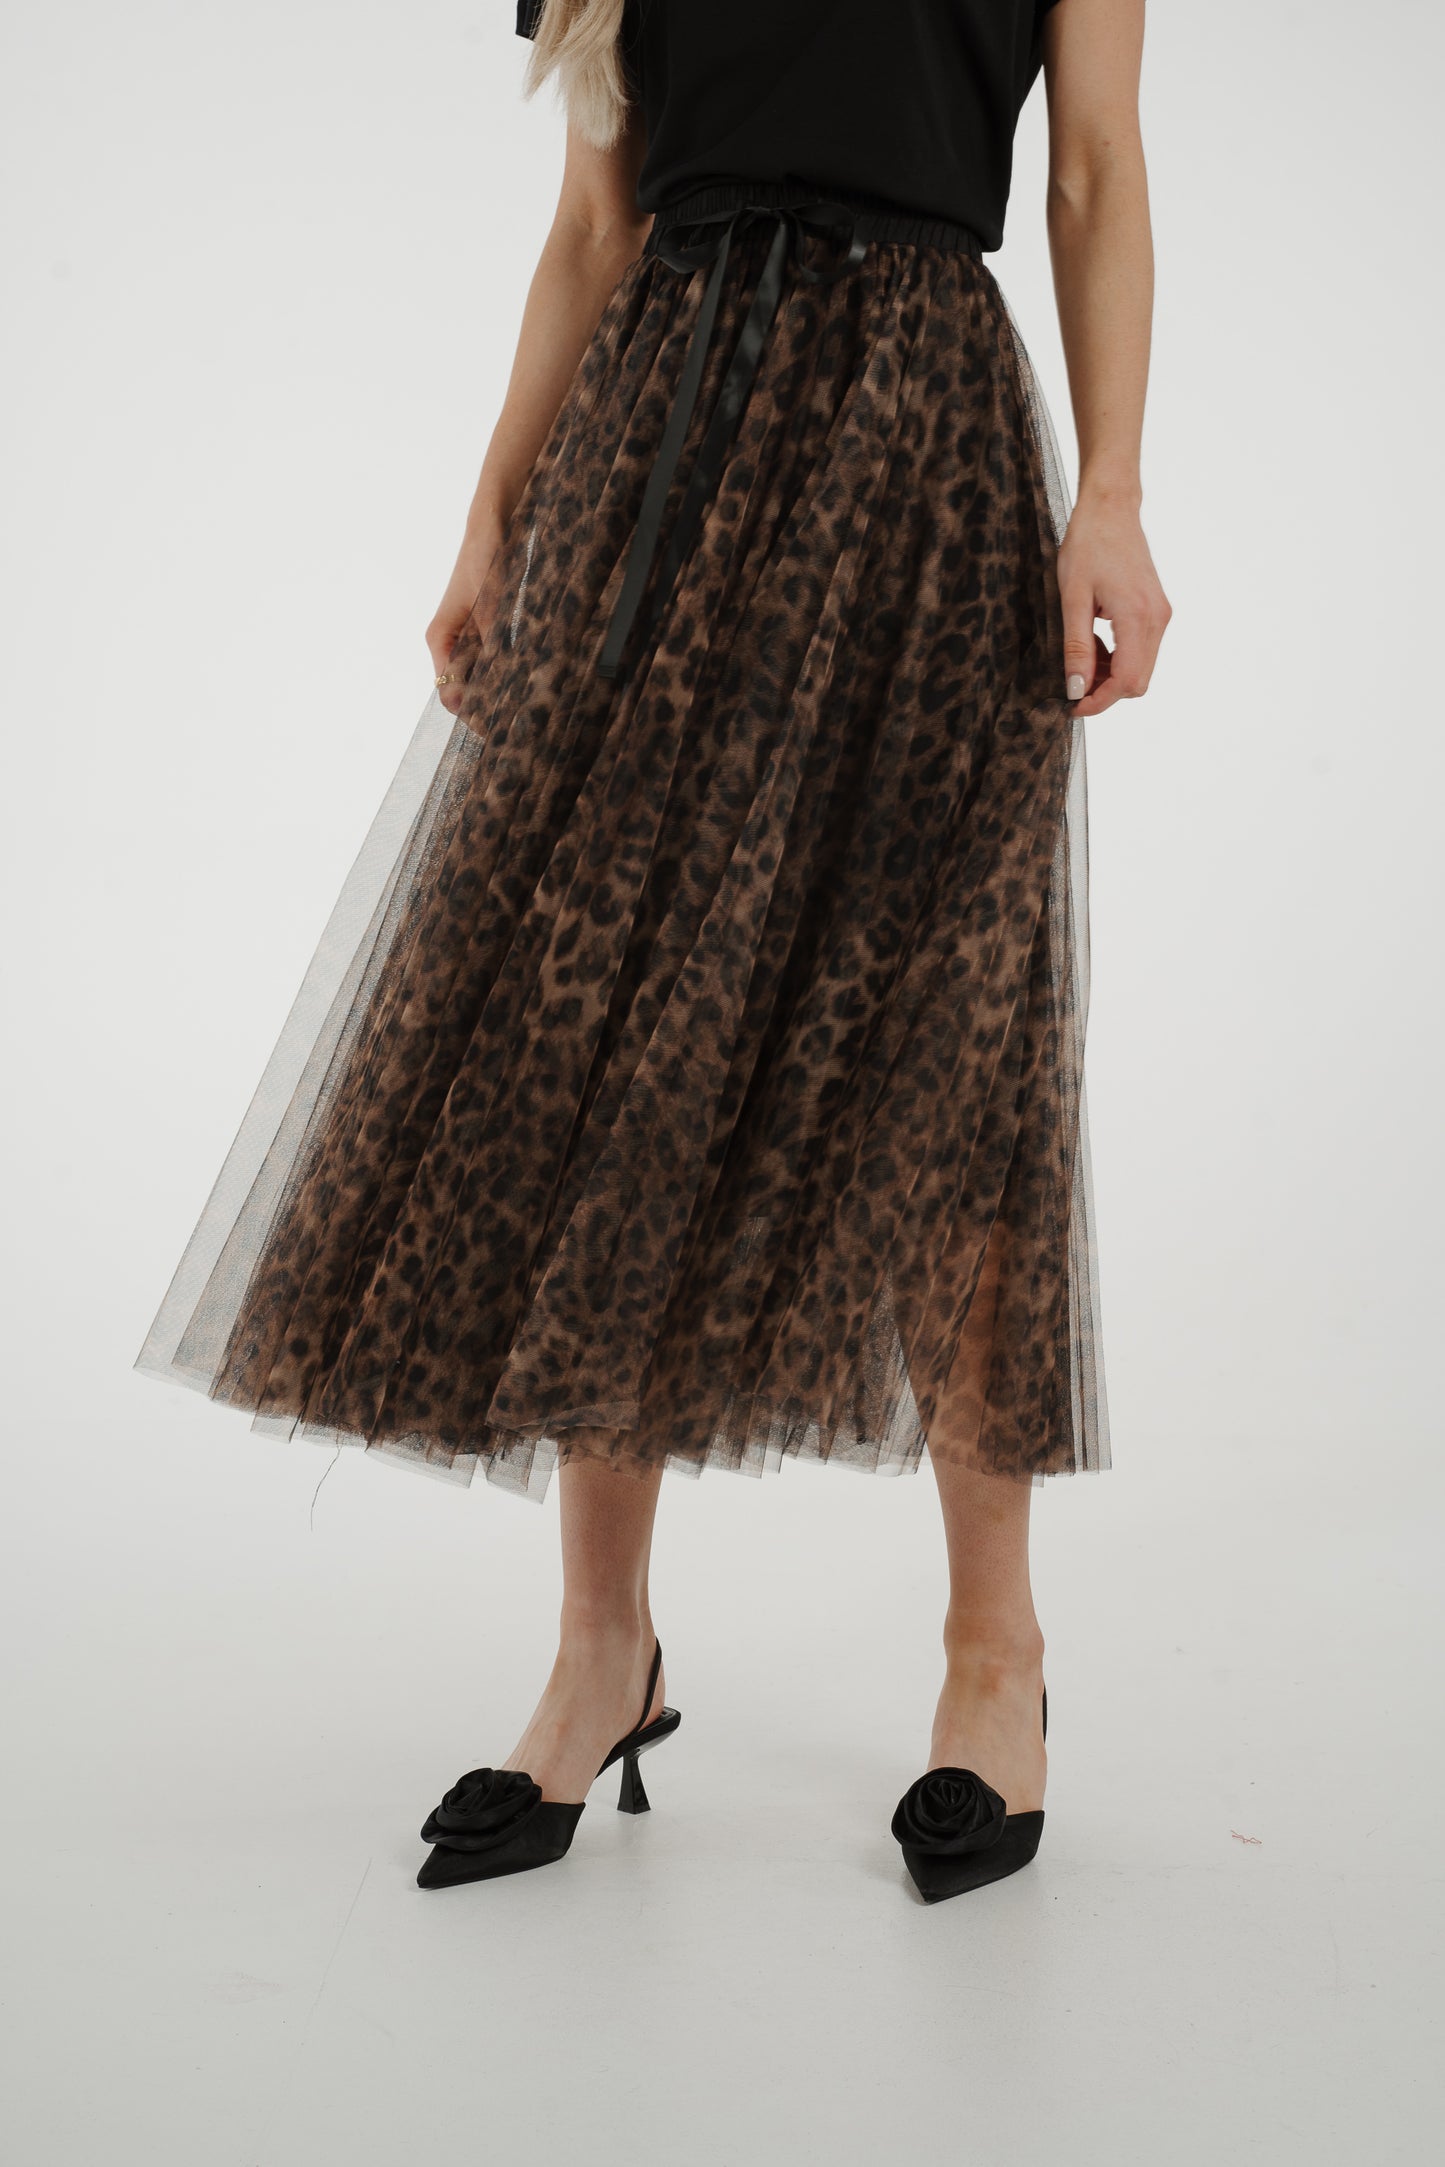 Polly Tulle Midi Skirt In Leopard Print